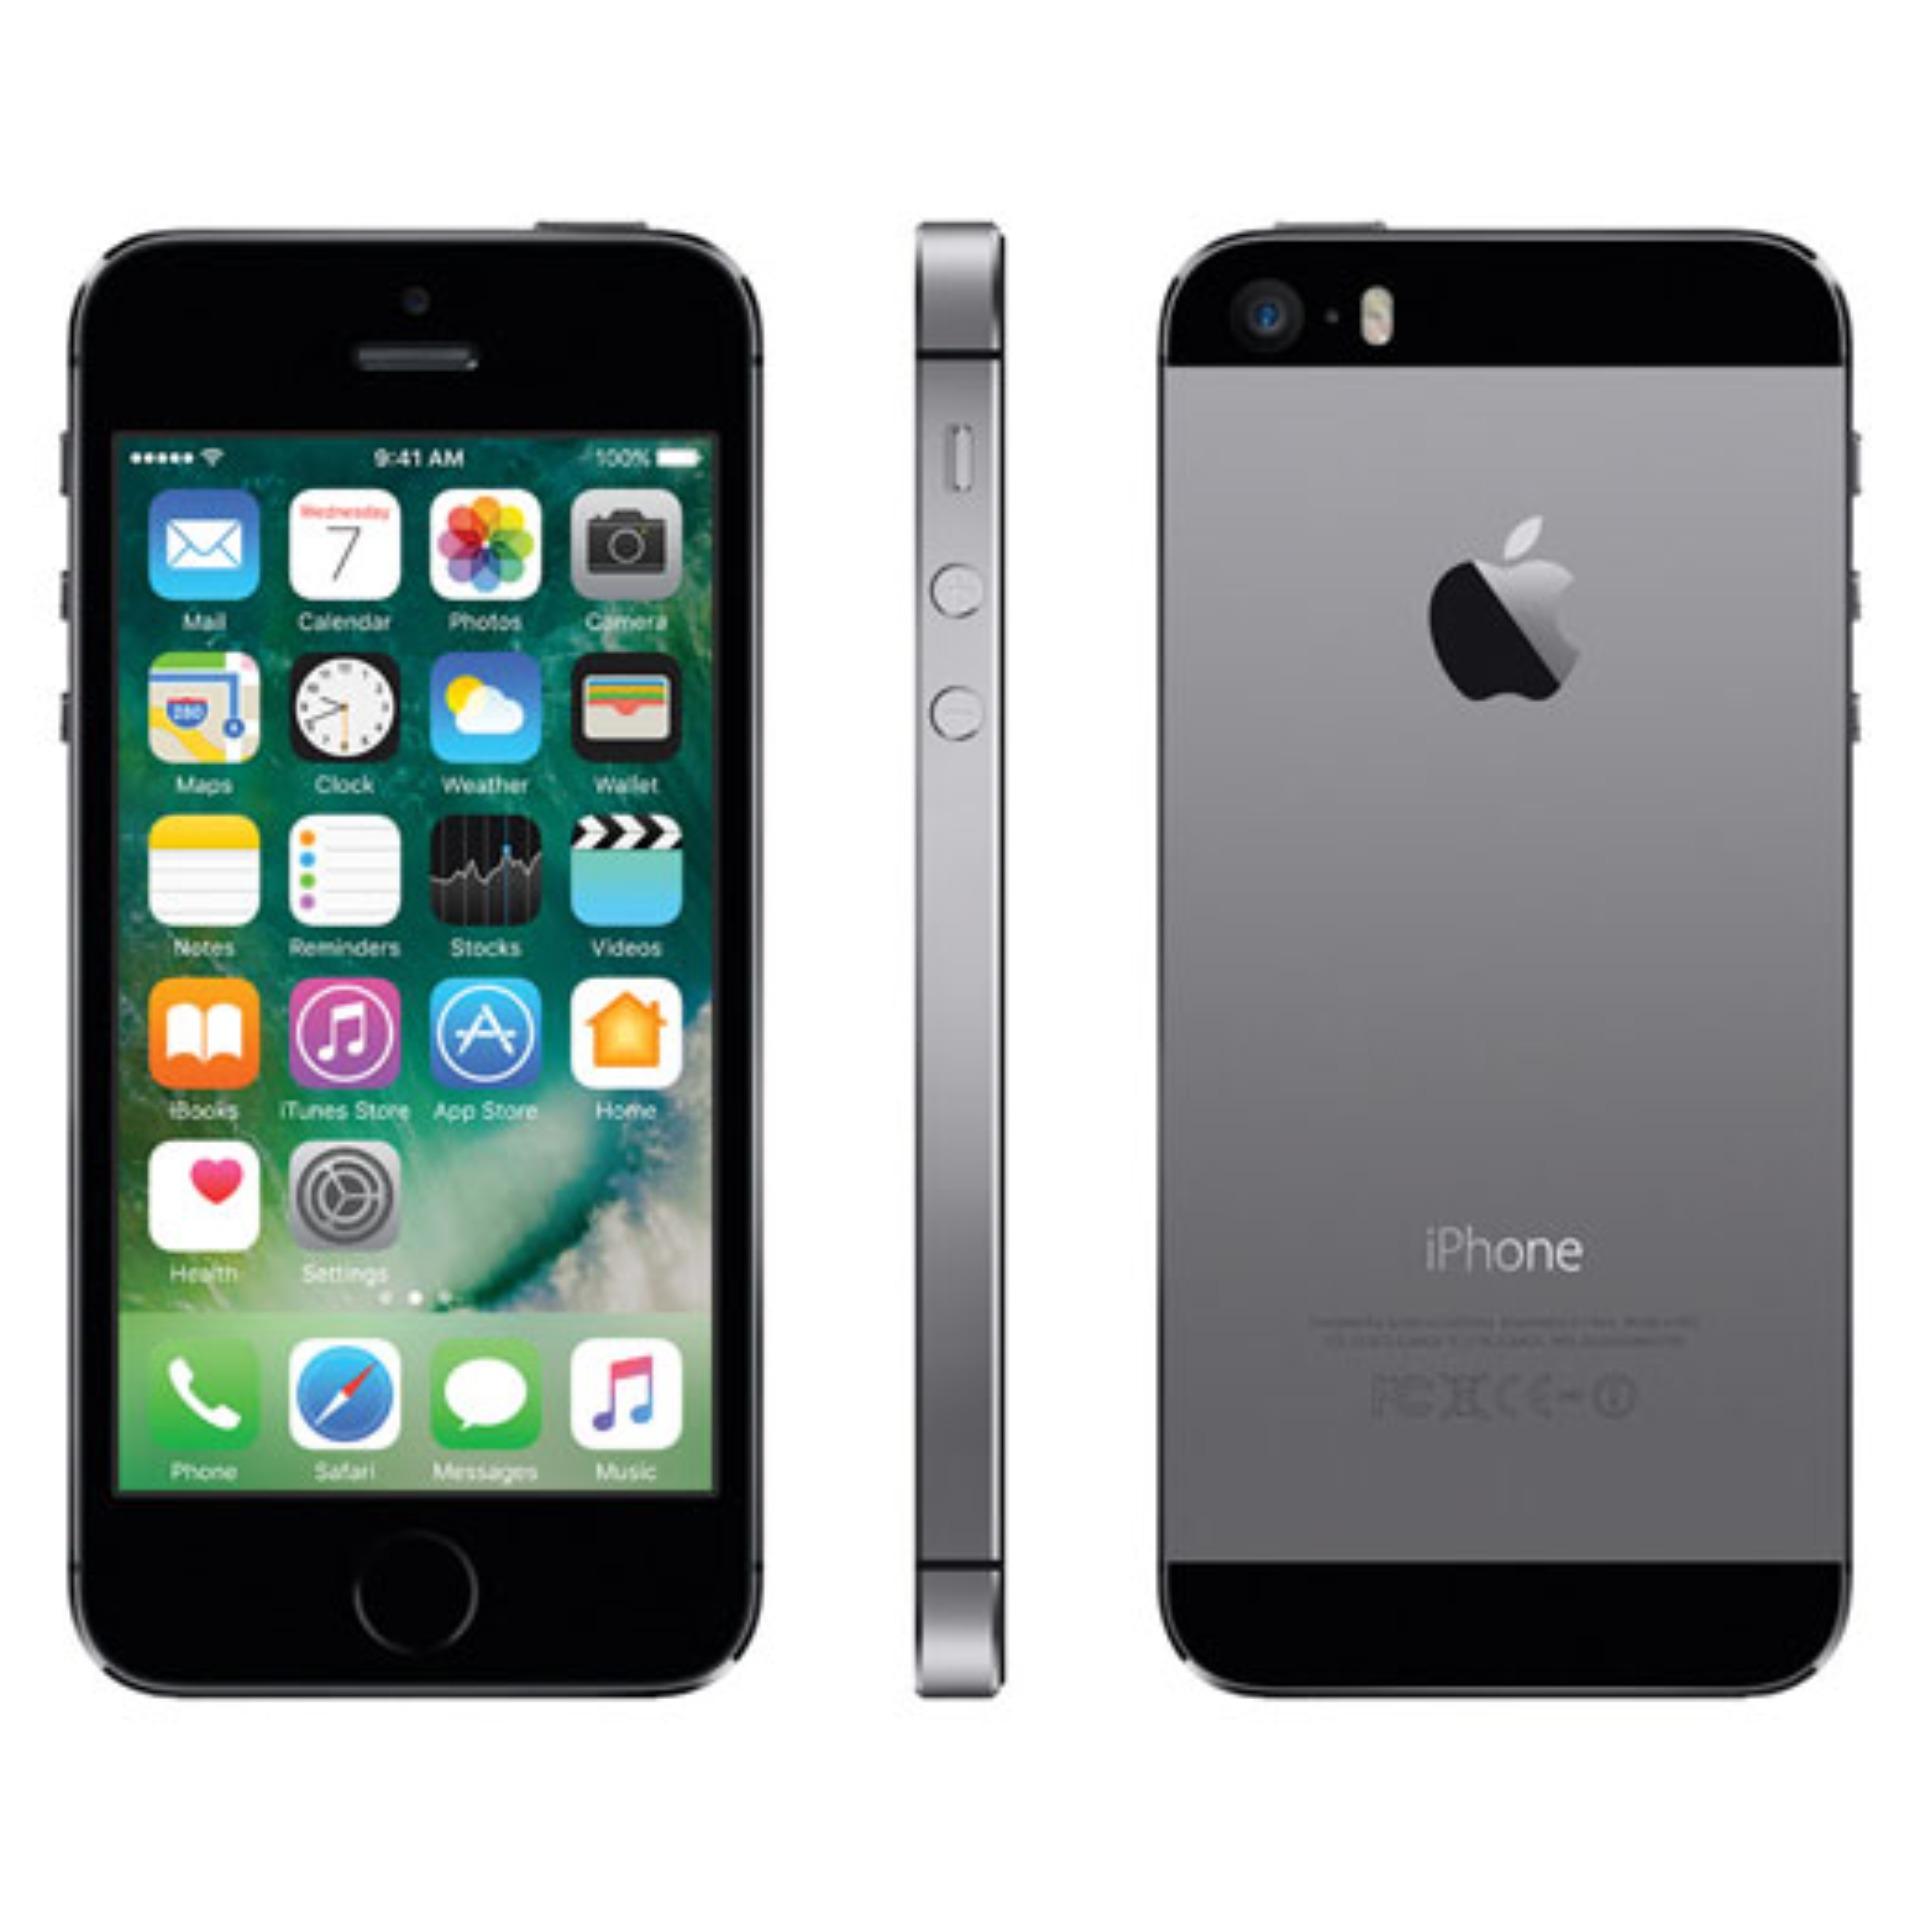 Apple Iphone 5 16GB Smartphone - black